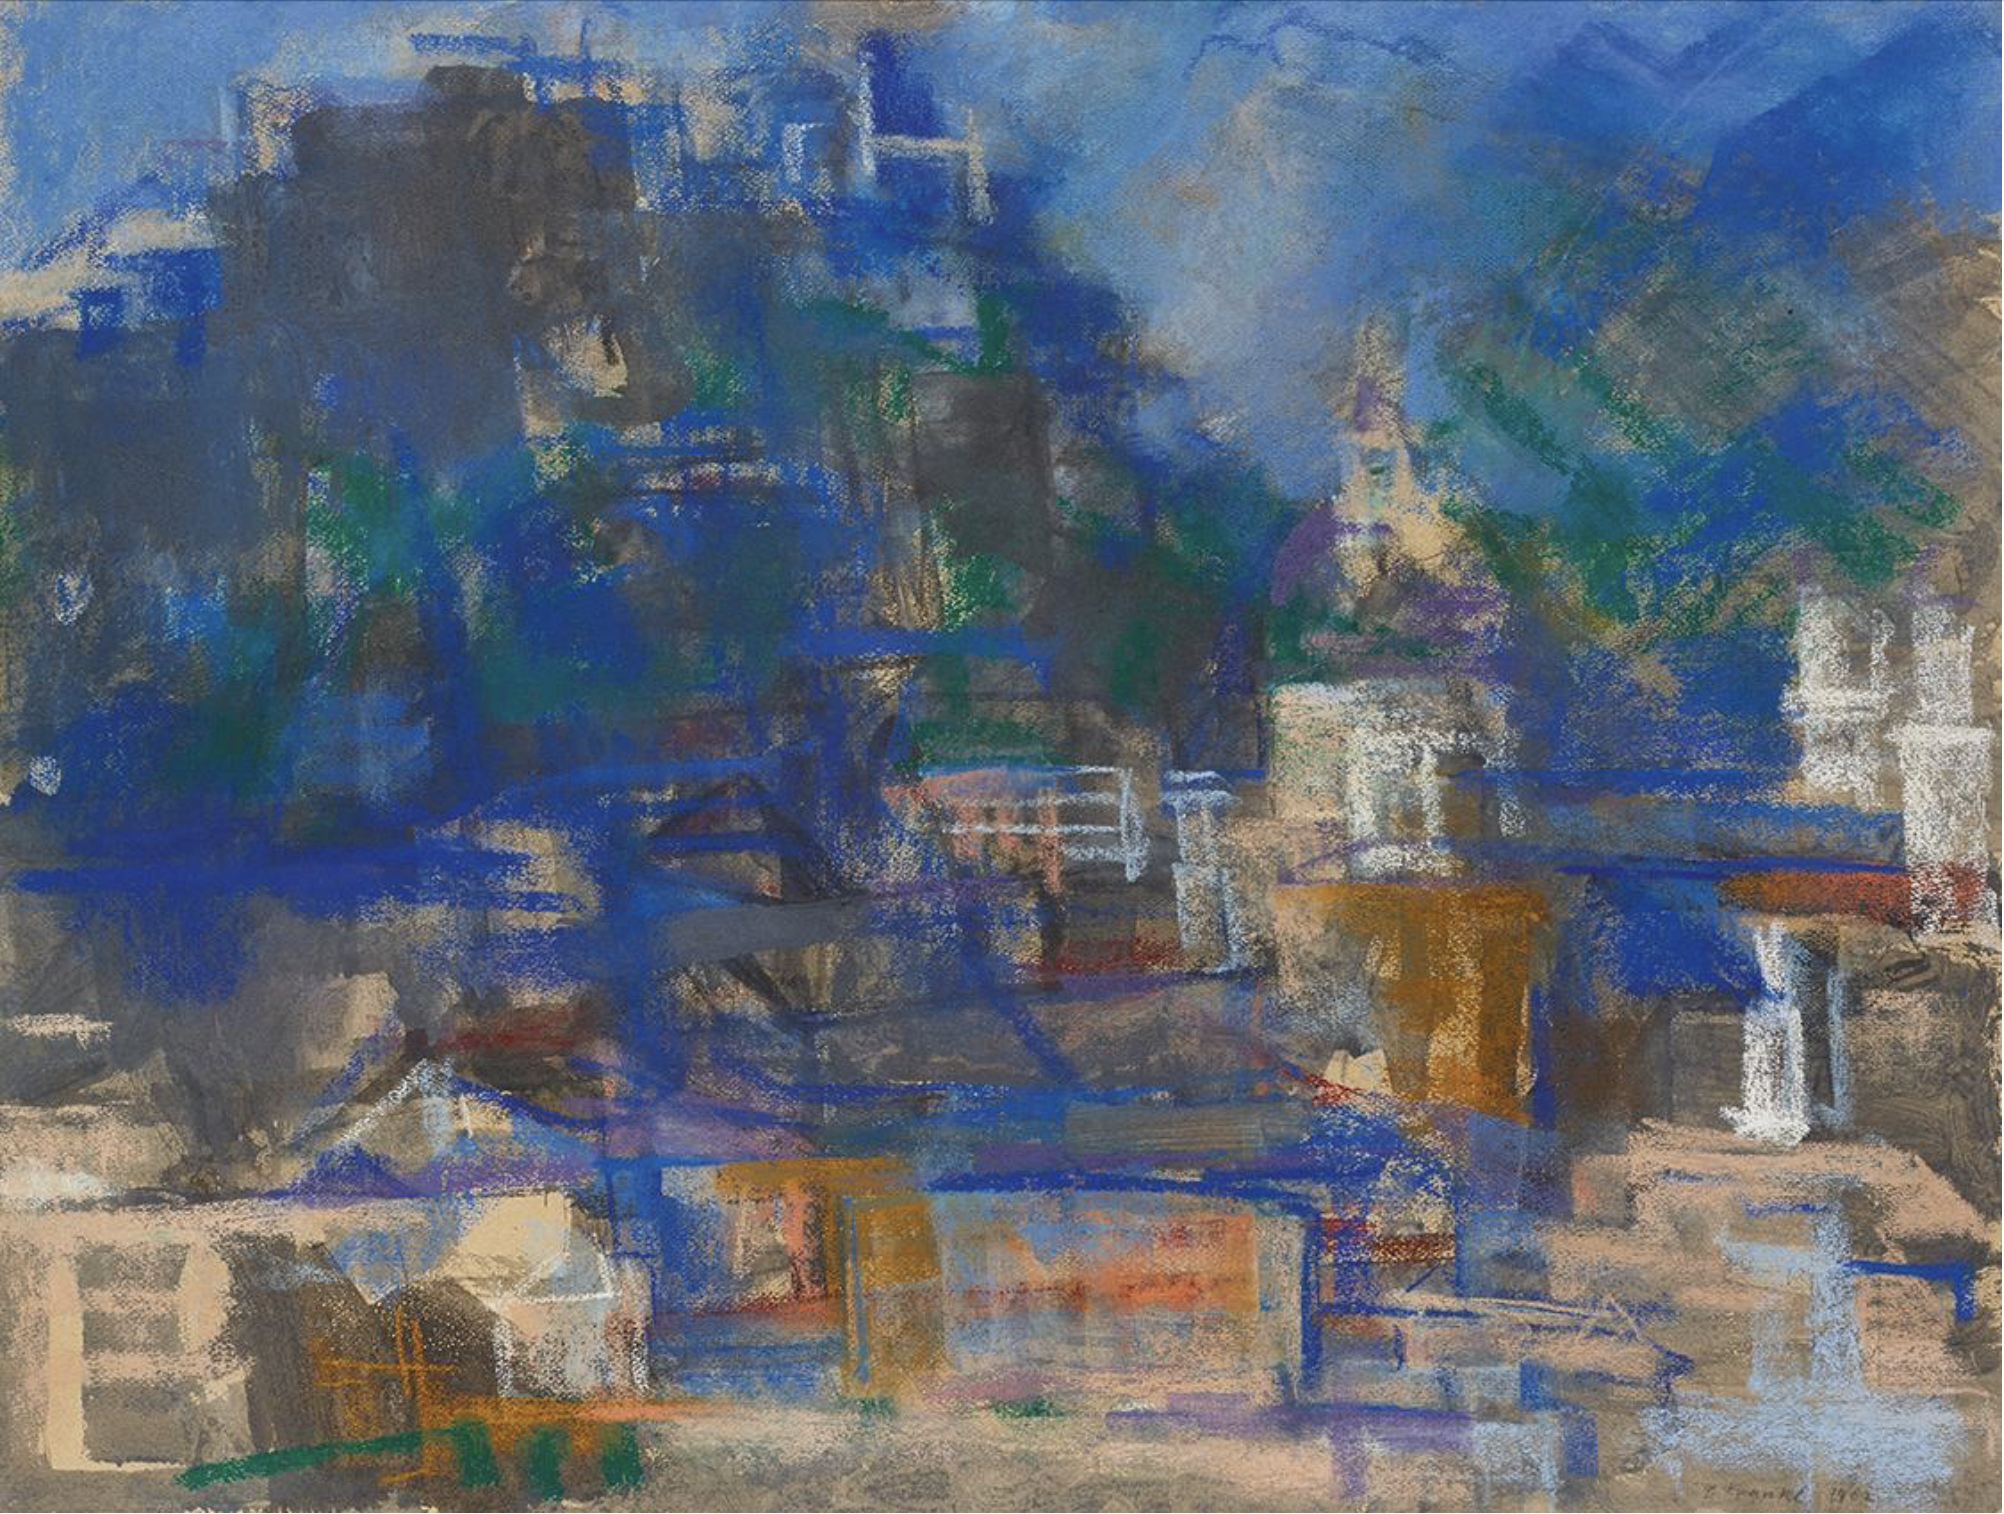 Gerhart Frankl, Salzburg III, 1962, charcoal, pastel, and gouache on paper, 48 x 63.5cm, Belvedere, Vienna, Austria - Loosen up